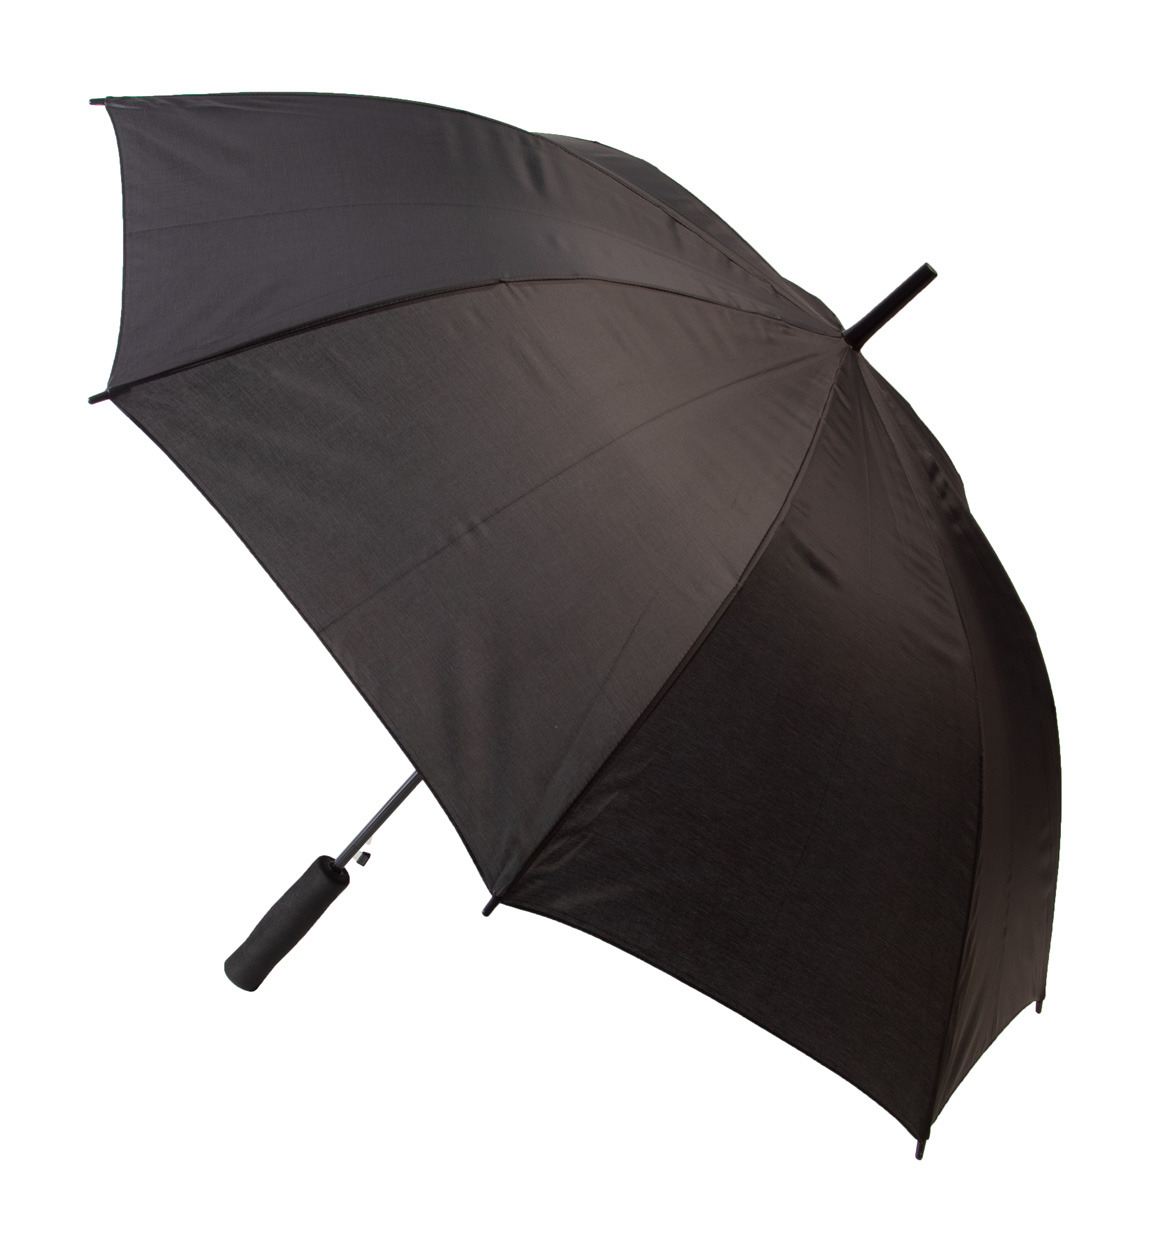 Typhoon umbrella - black